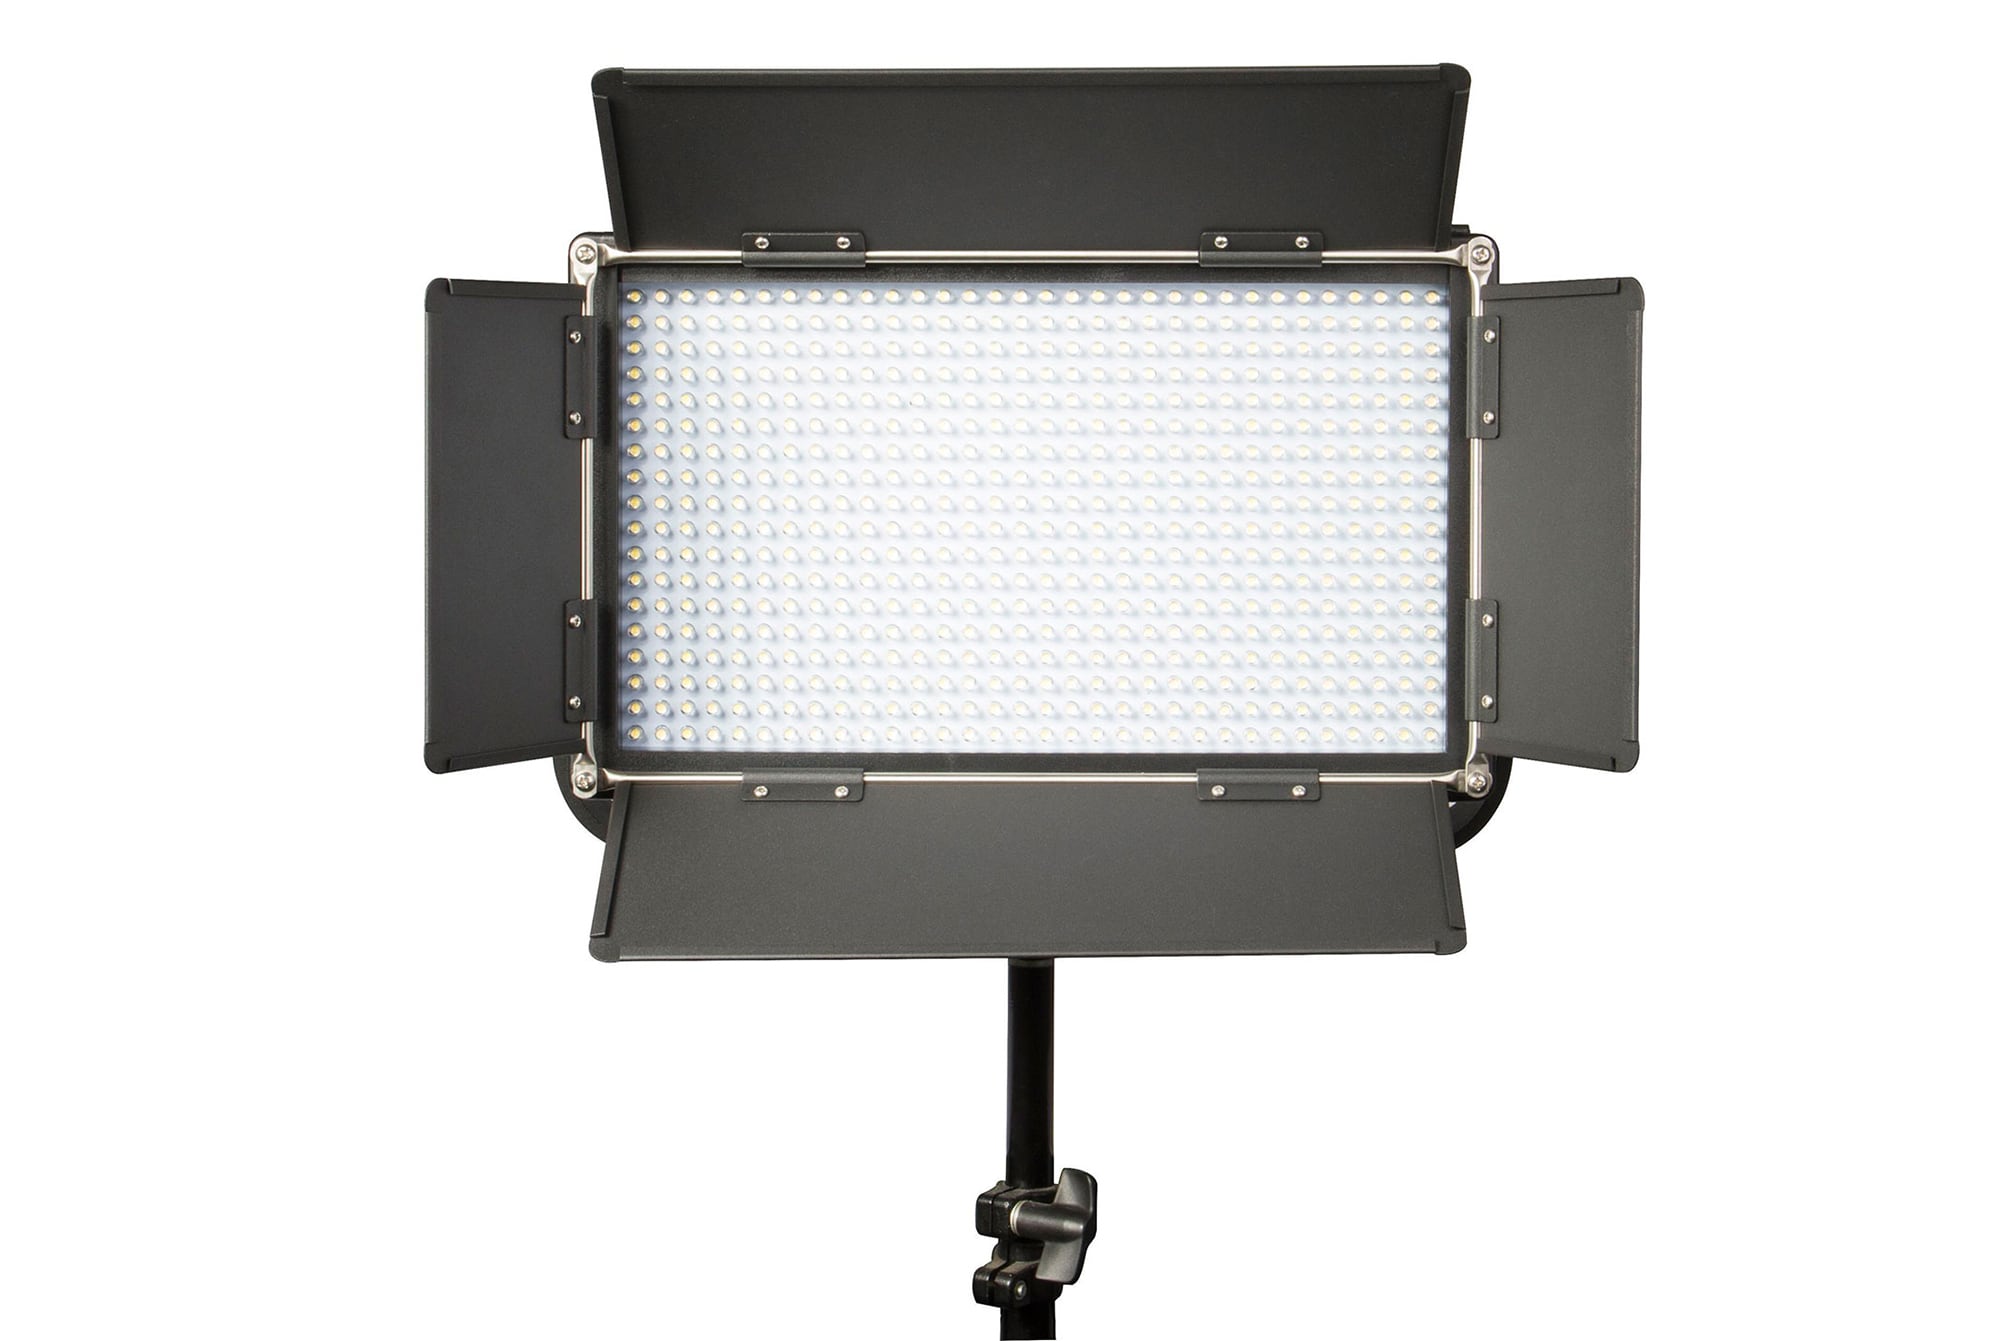 Swit S-2111D, 576-LED Daylight LED Panel with DMX